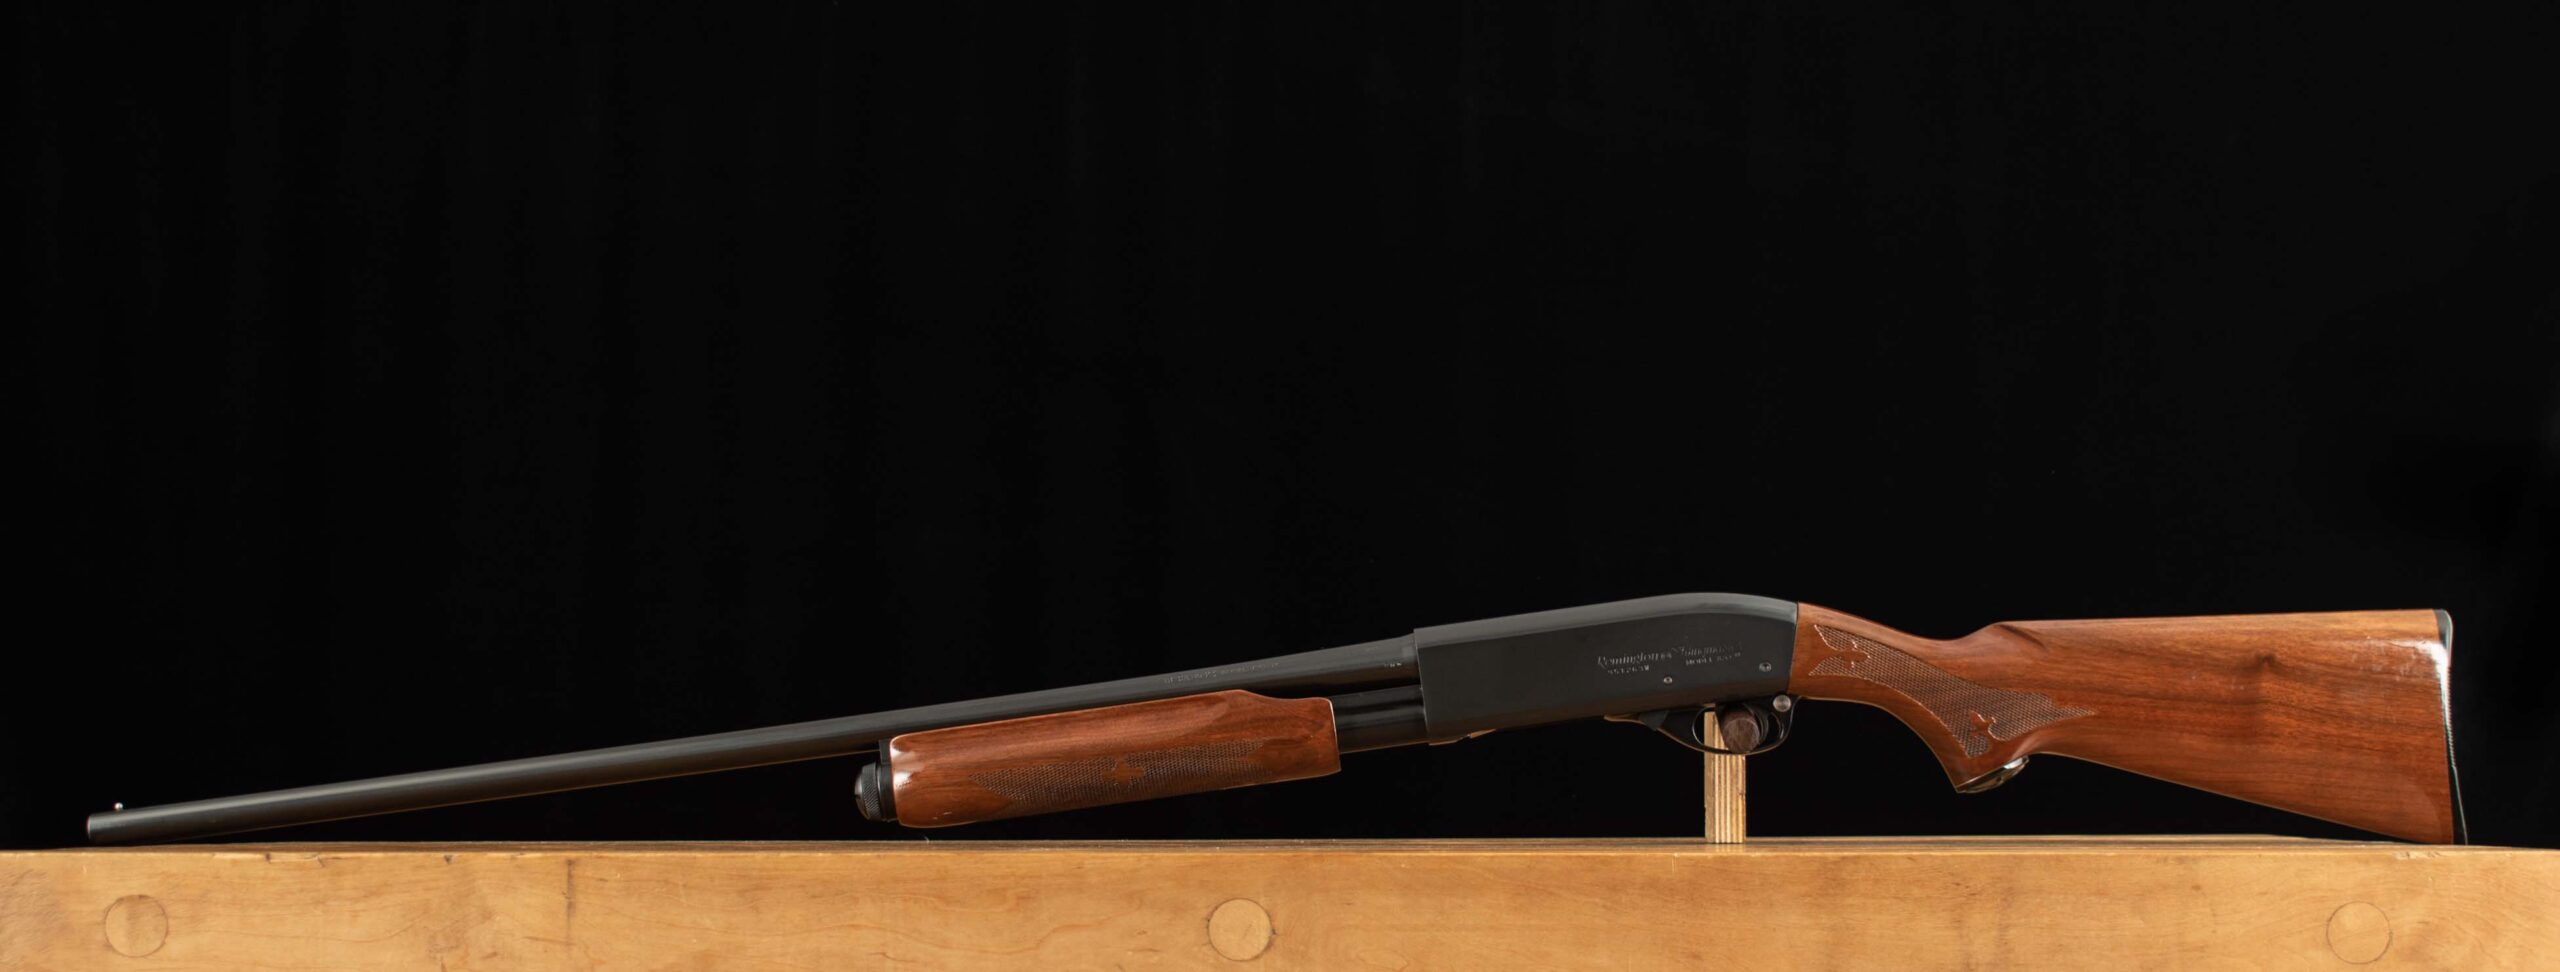 Remington Model 870 Wingmaster, 16ga - 1965, 99%